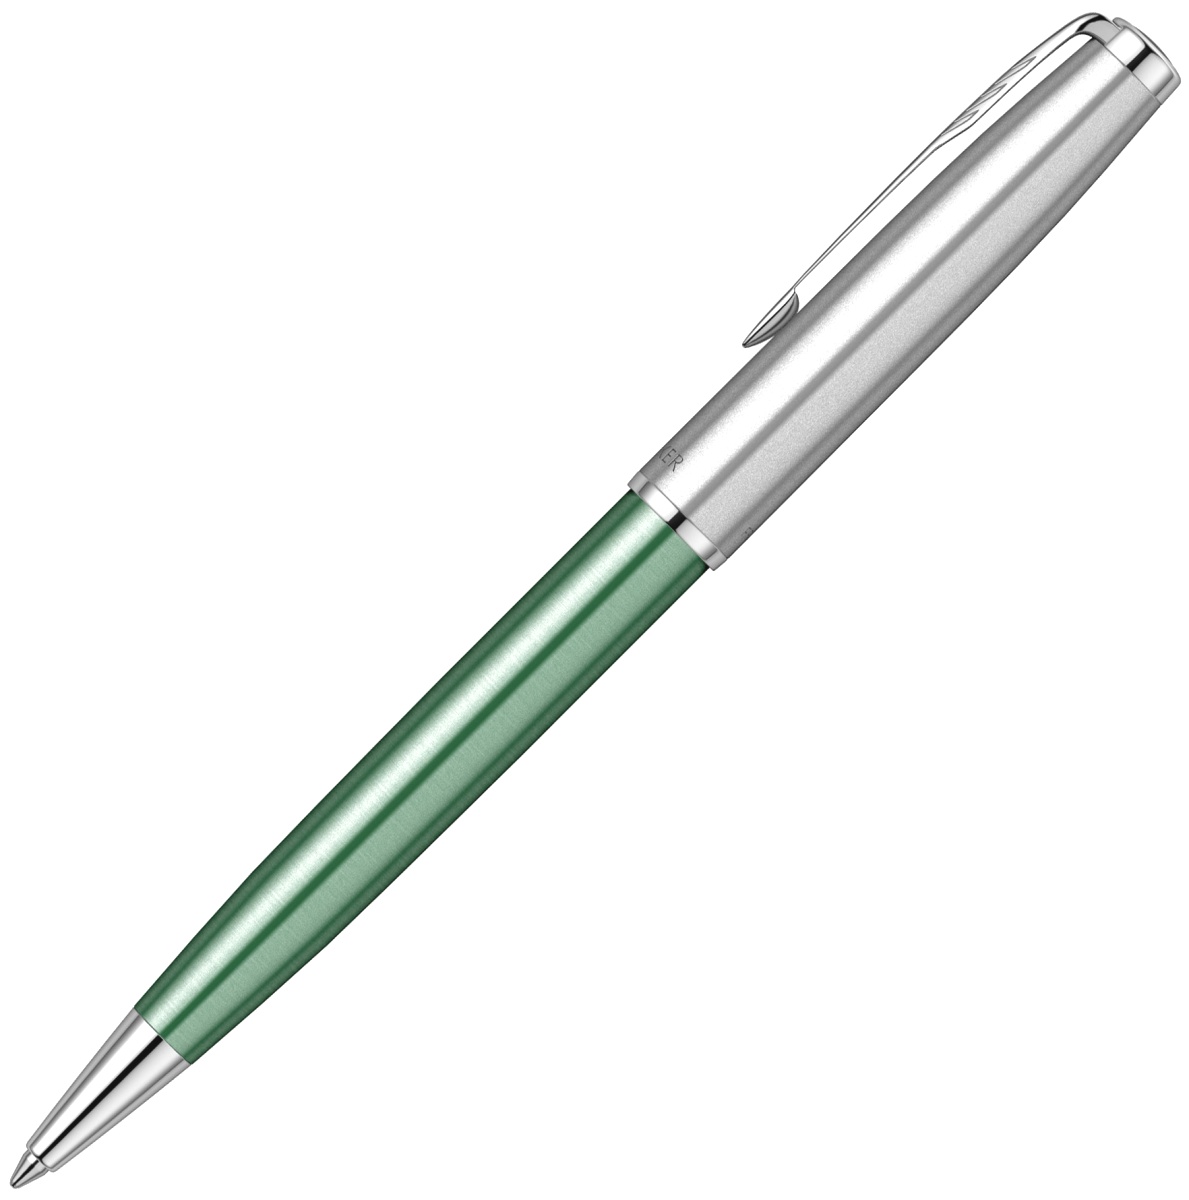  Ручка шариковая Parker Sonnet Essential SB K545, Green CT, фото 2